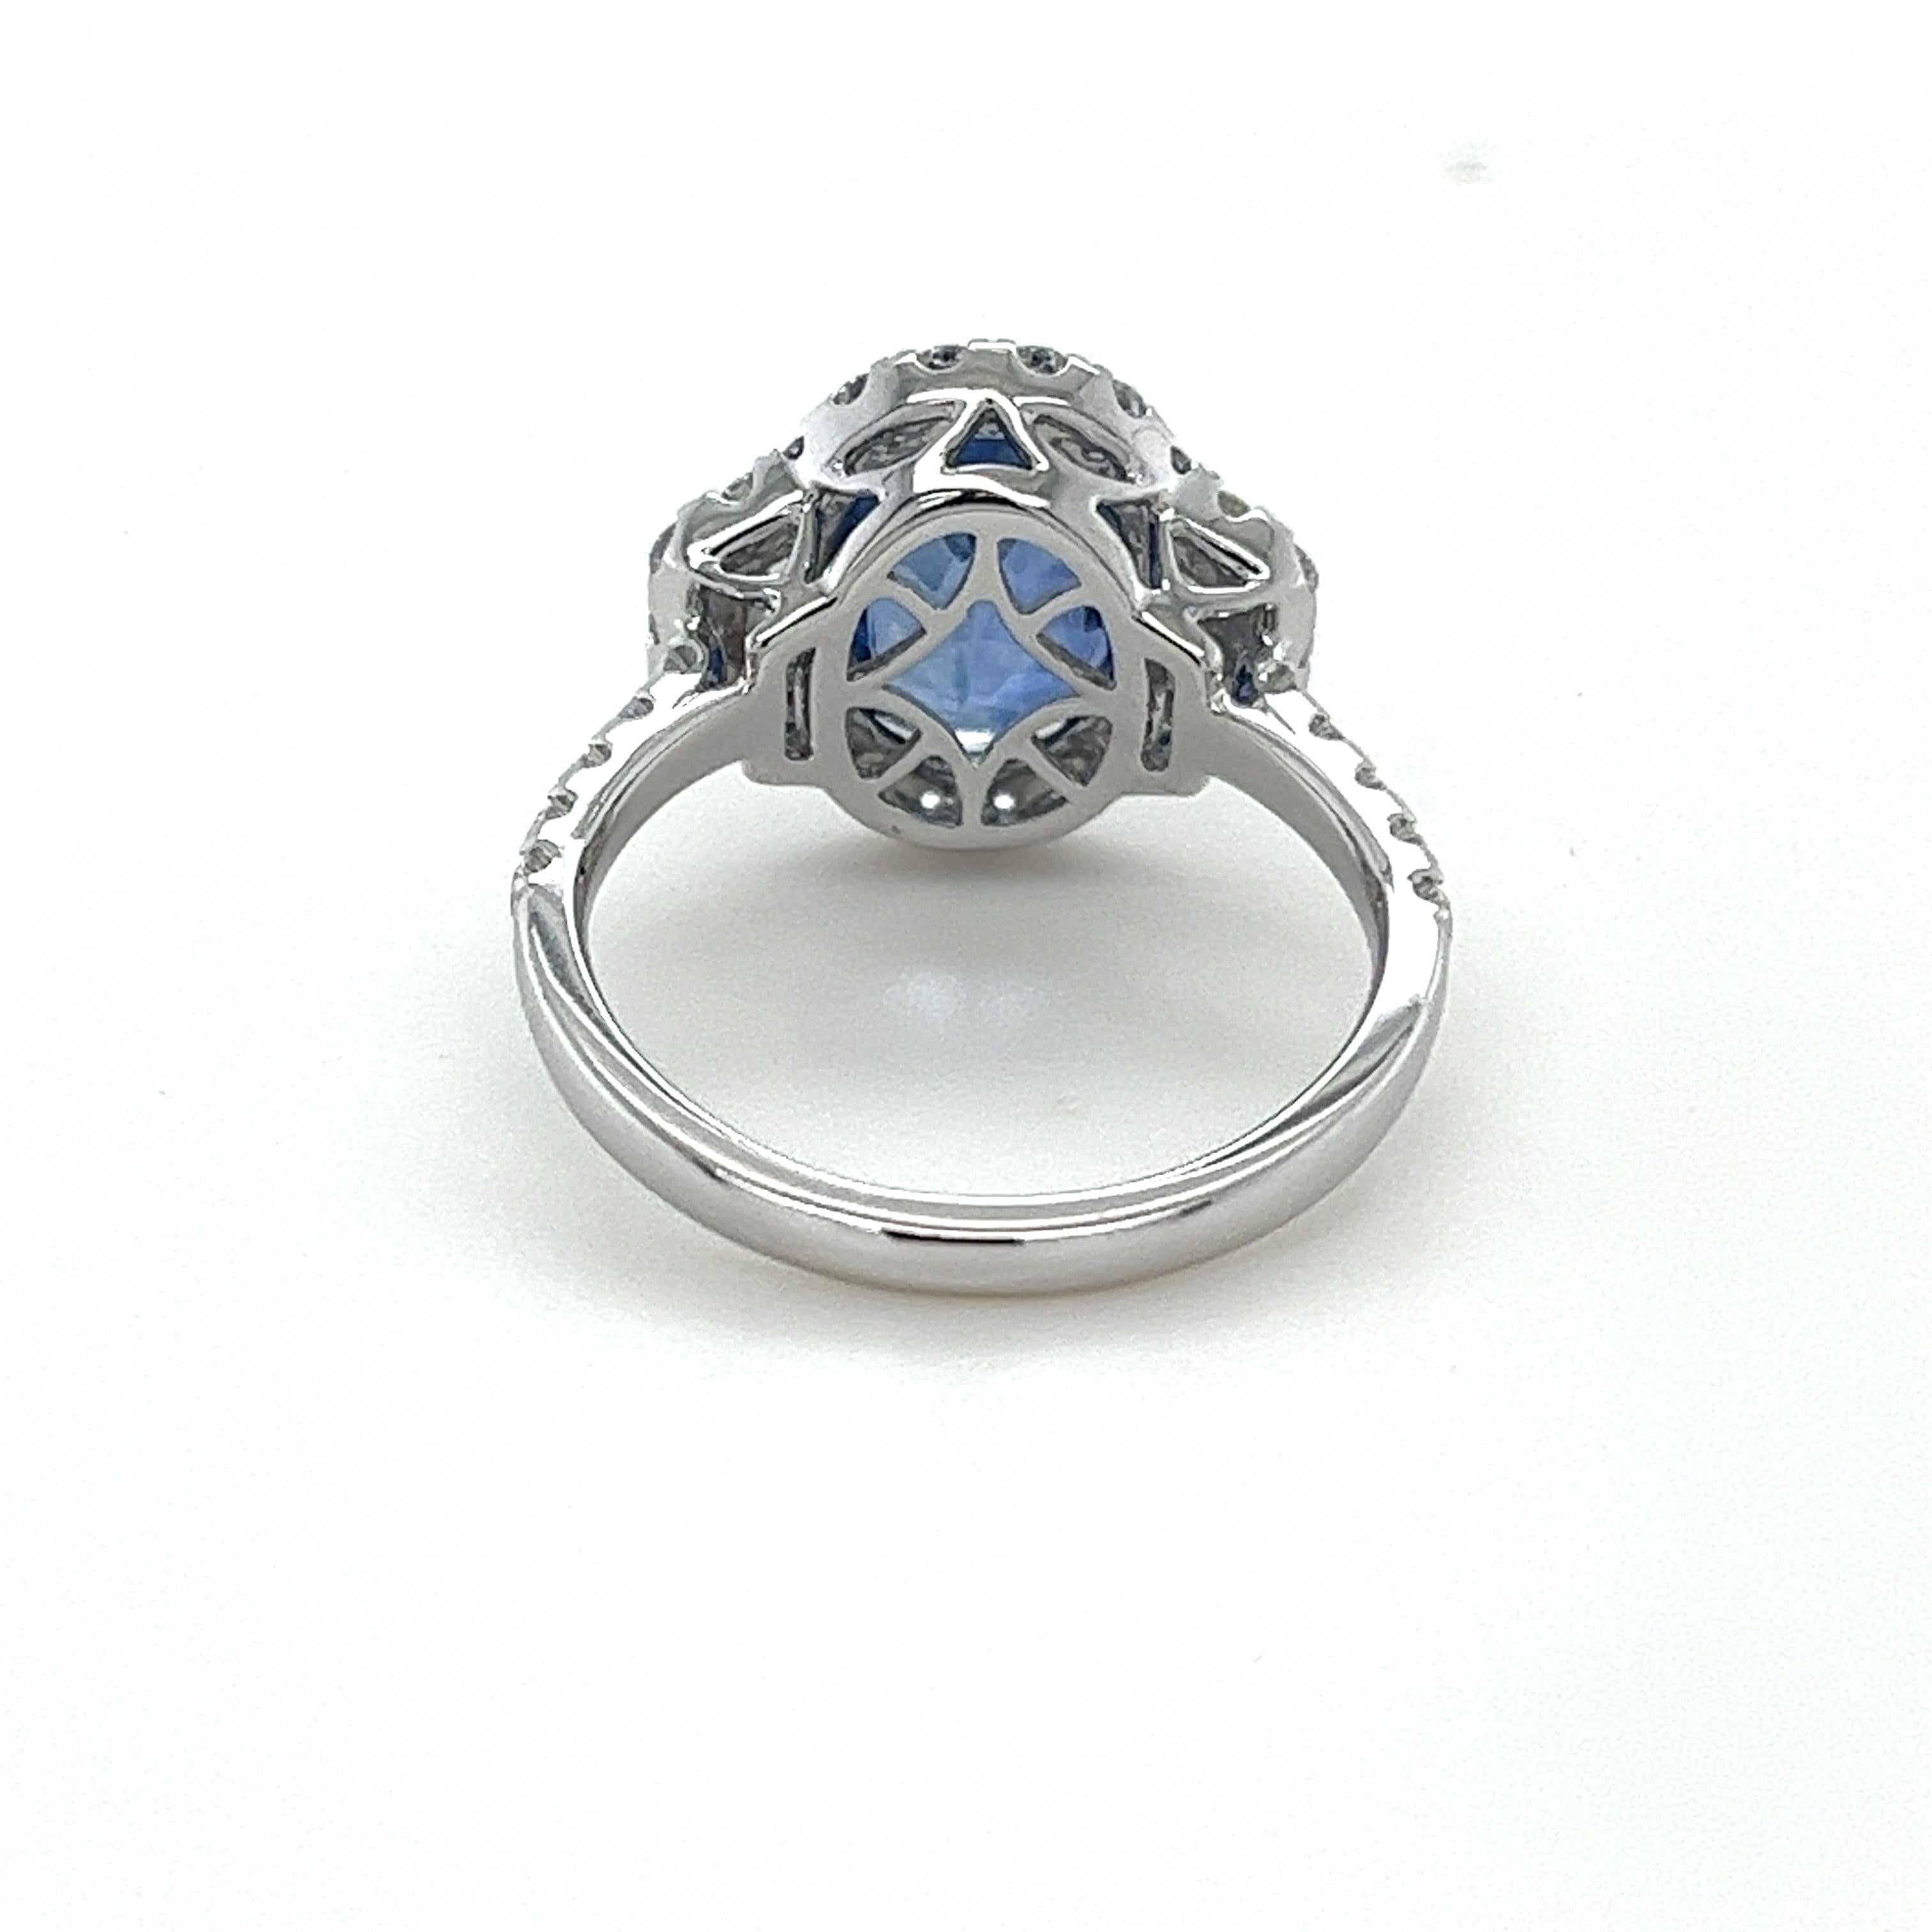 Oval Cut 3.14 Carat GIA Certified Ceylon Sapphire & Diamond Ring in 18 Karat White Gold For Sale